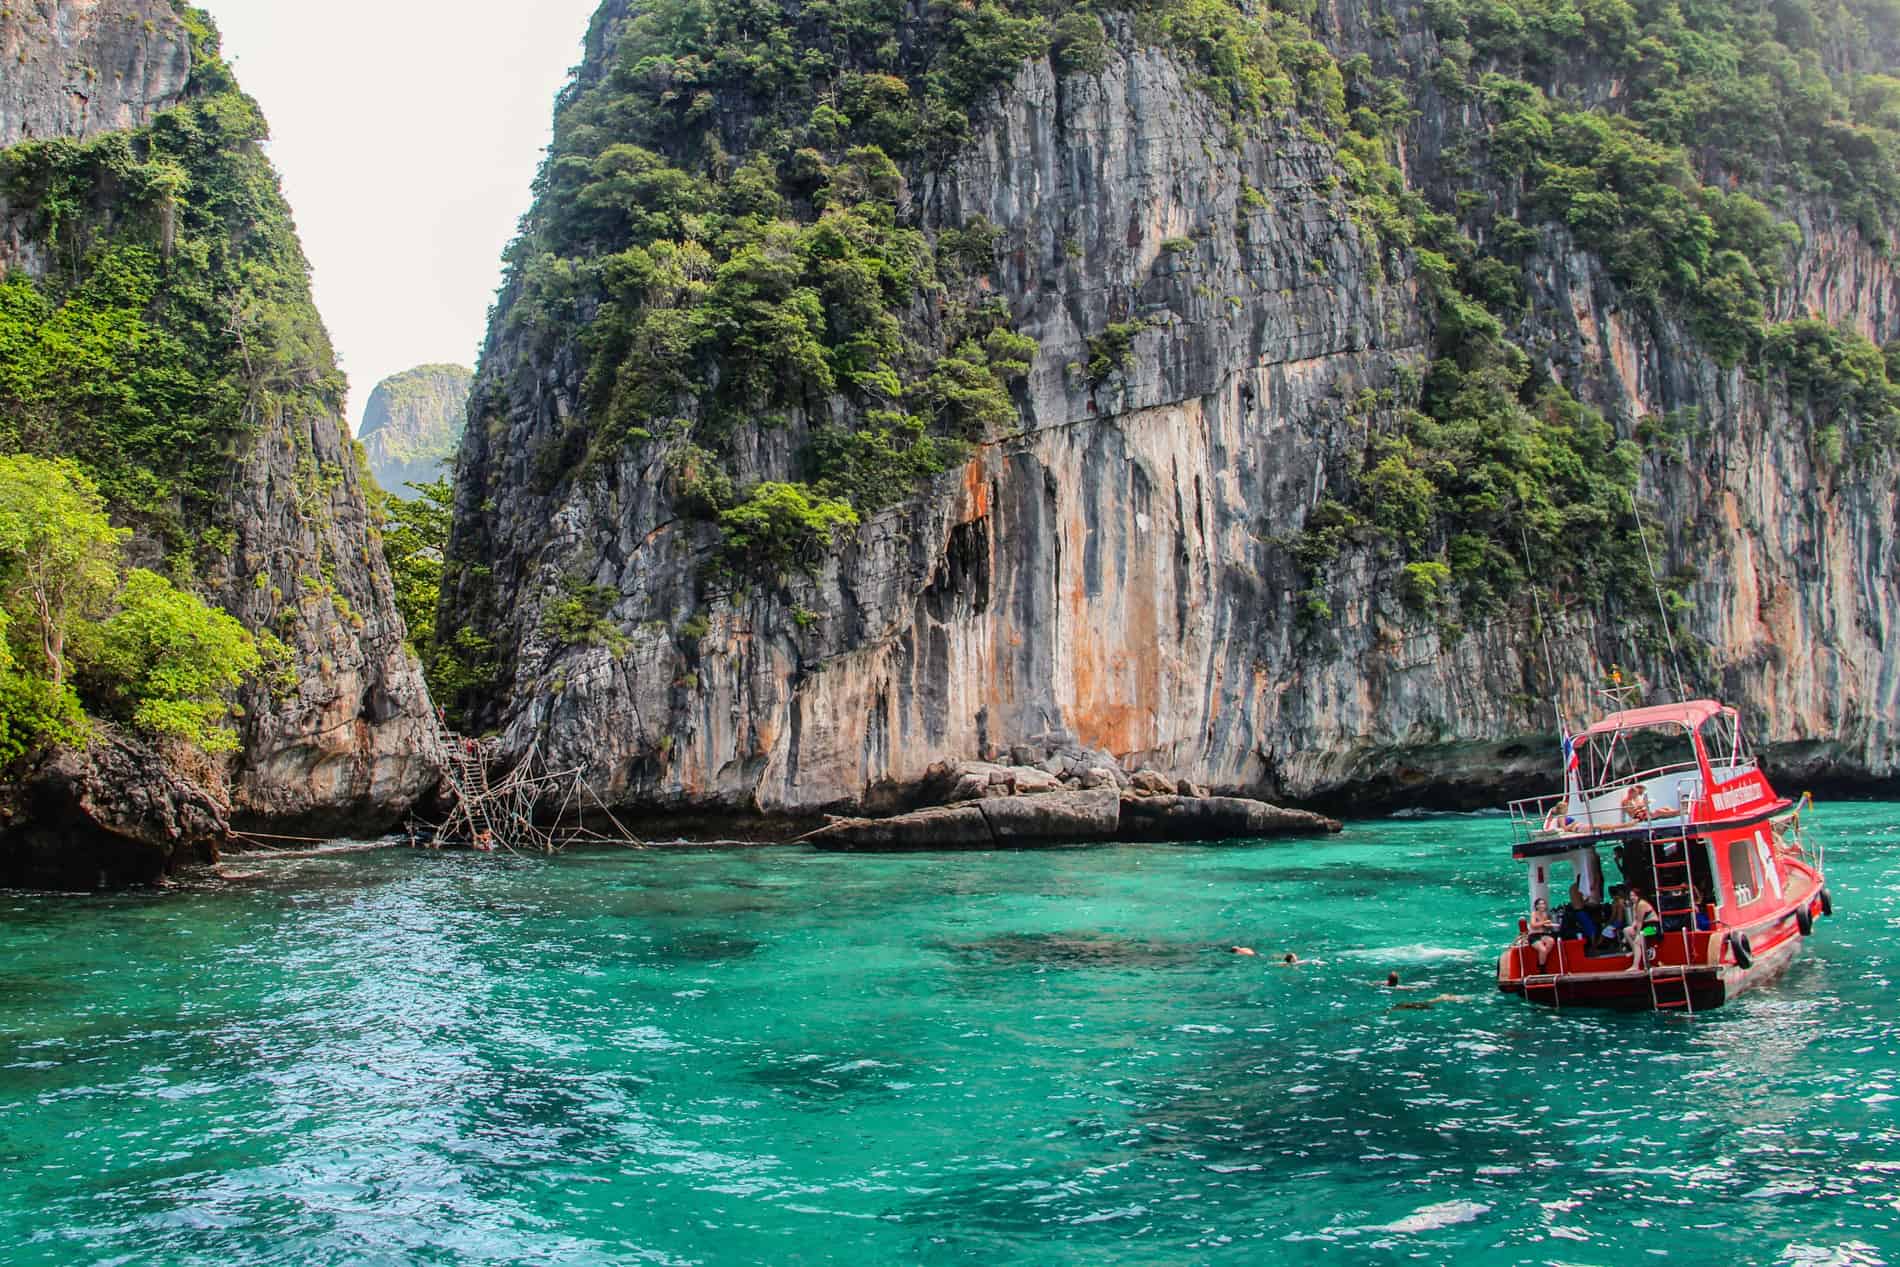 https://www.bordersofadventure.com/wp-content/uploads/2022/01/How-to-get-to-Maya-Bay-Thailand.jpg